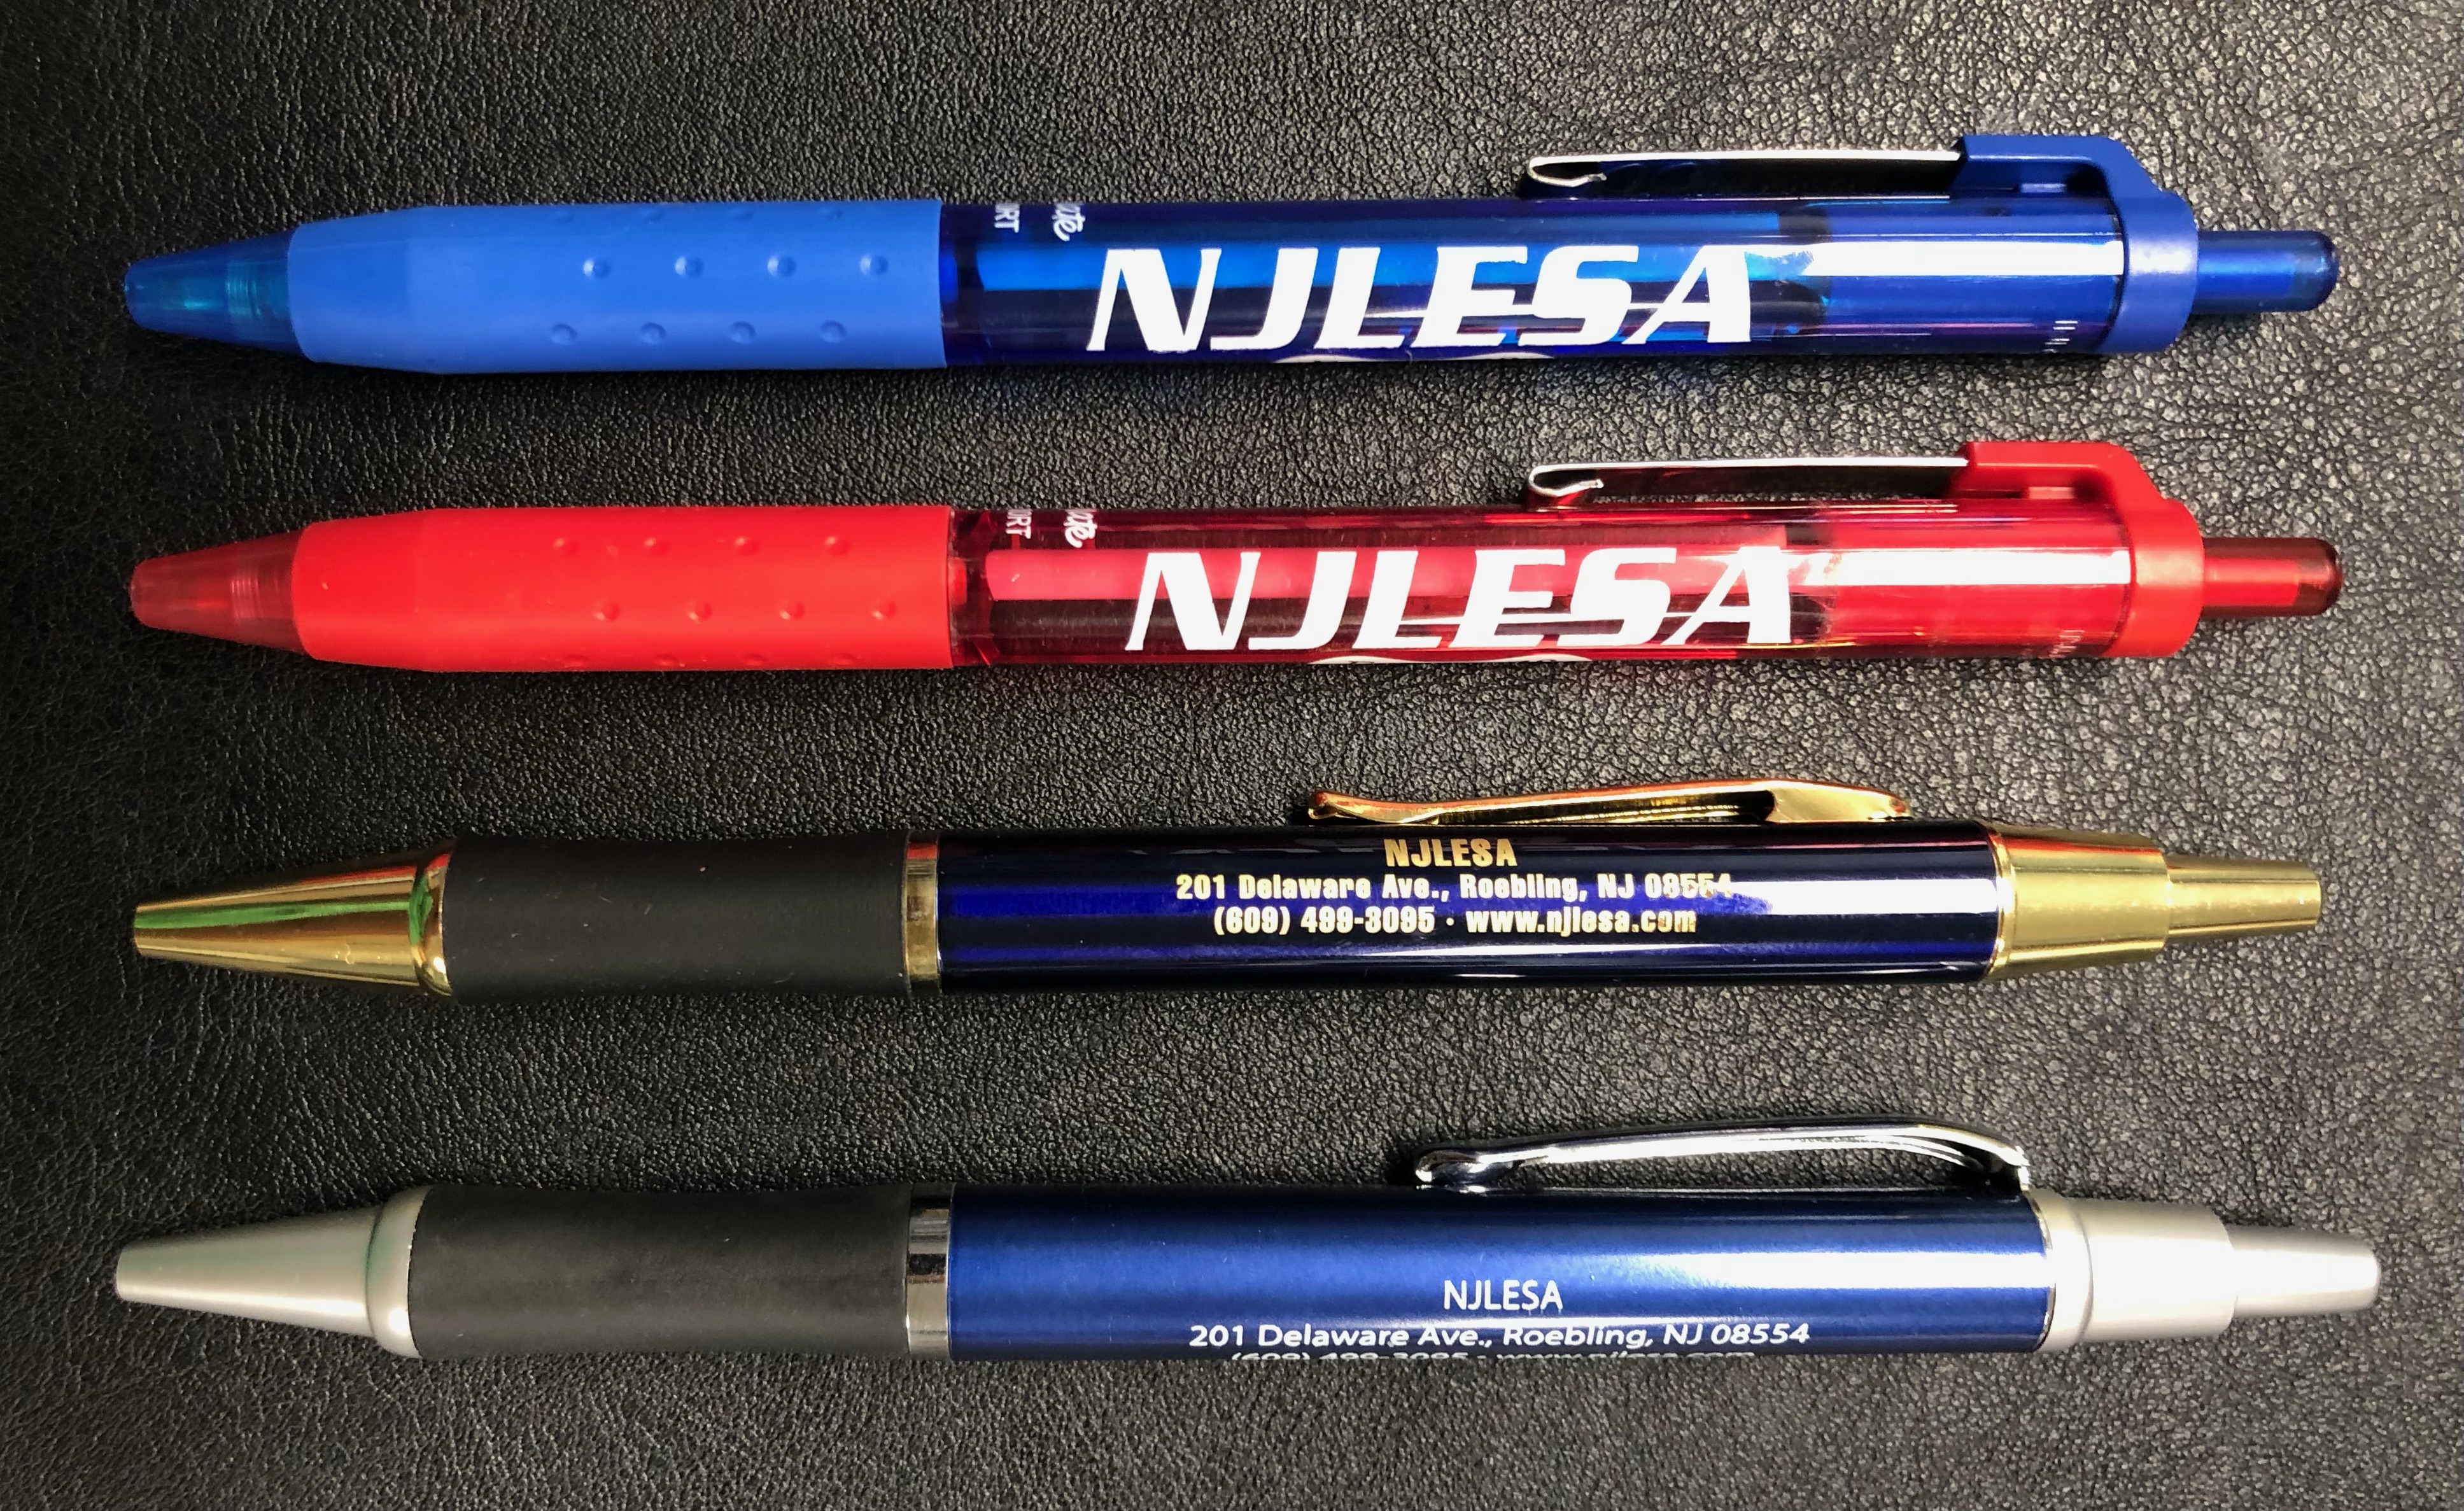 Pack of 4 Assorted NJLESA Pens